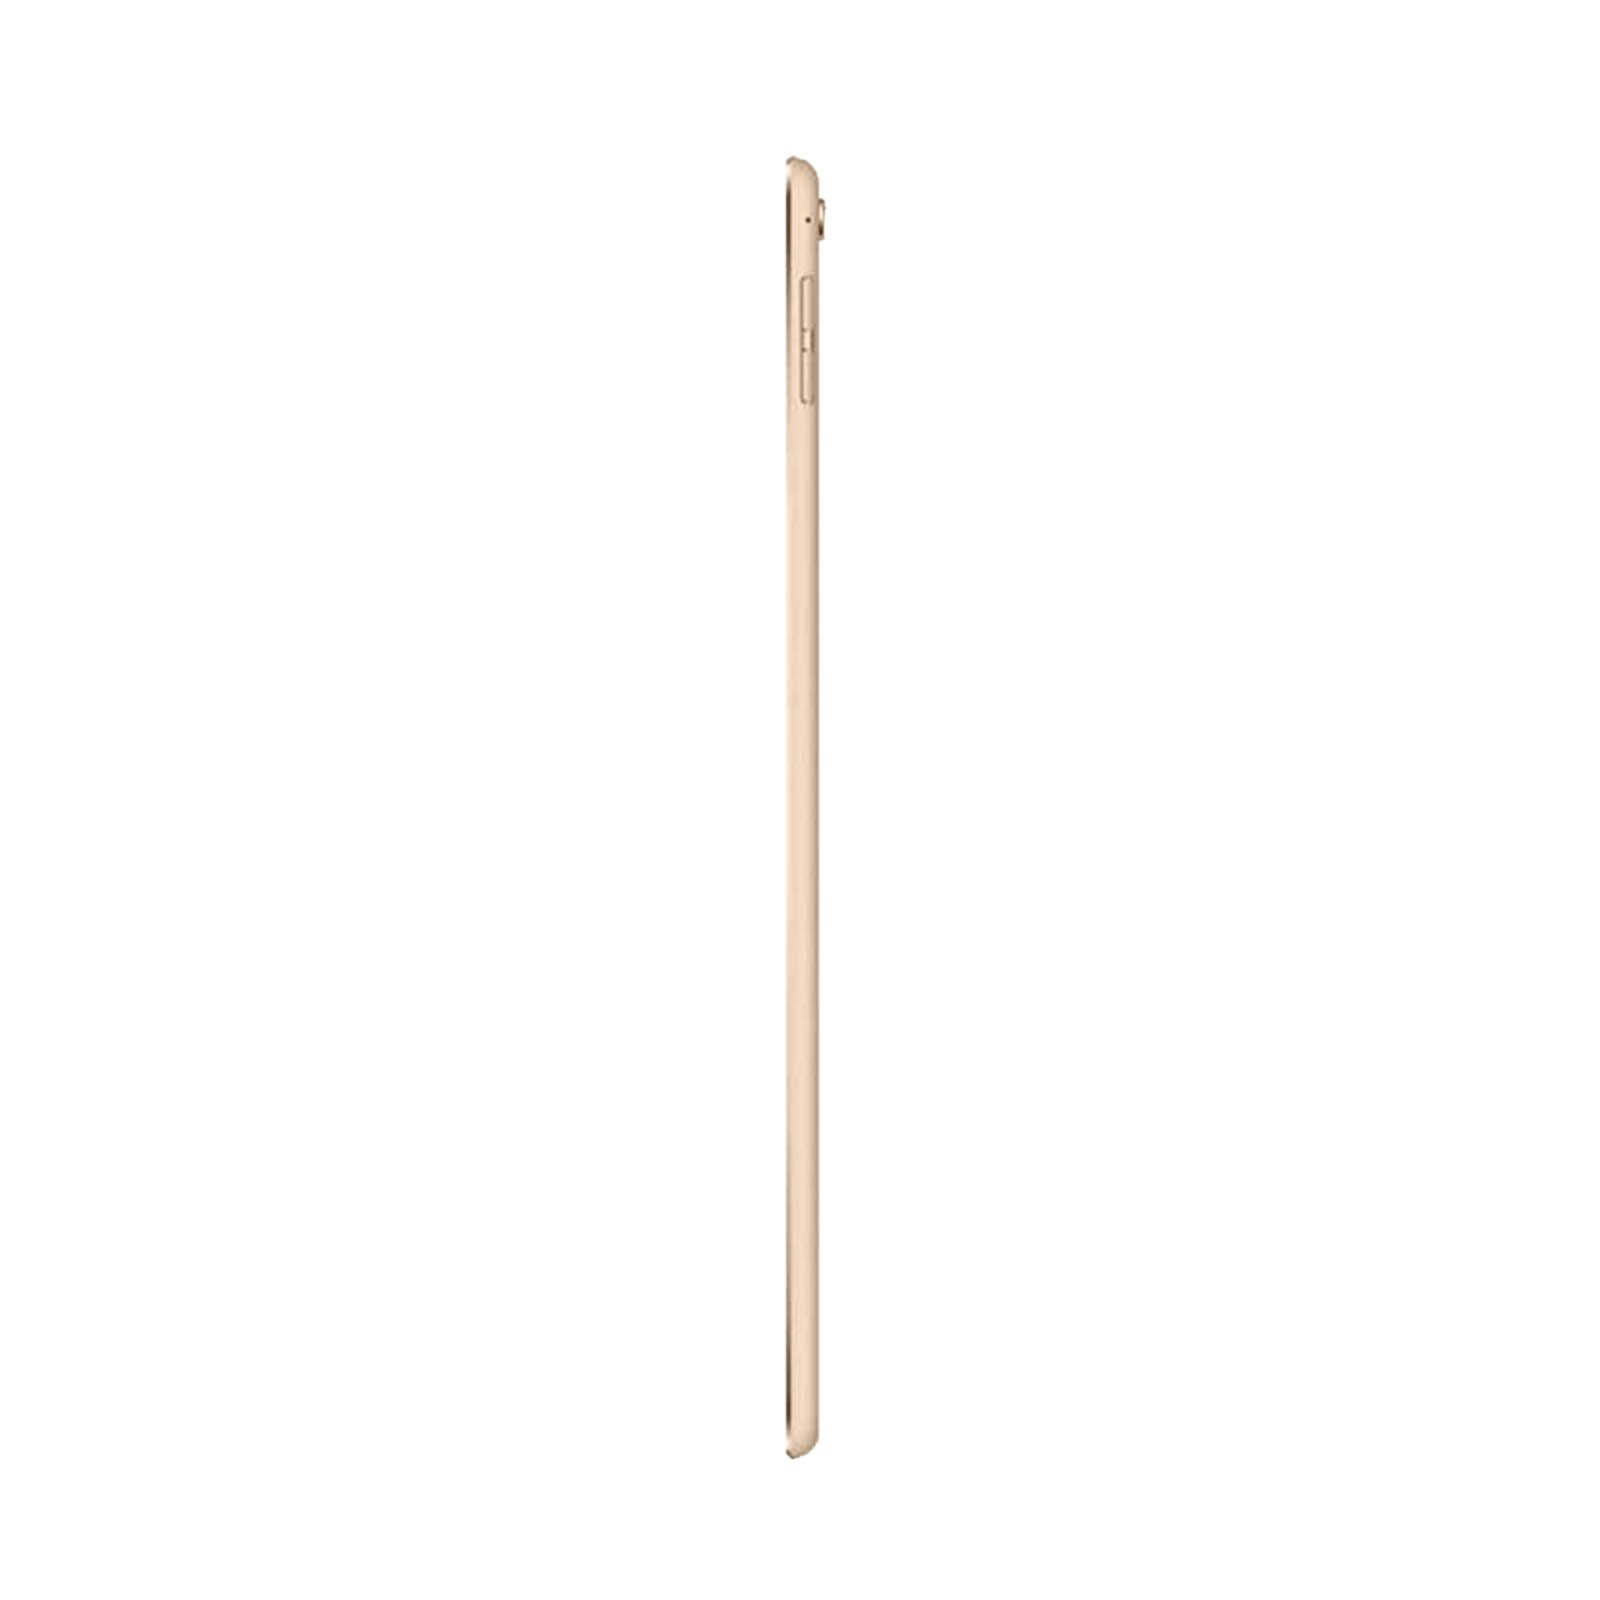 iPad Pro 9.7 Inch 256GB Gold Pristine - Unlocked